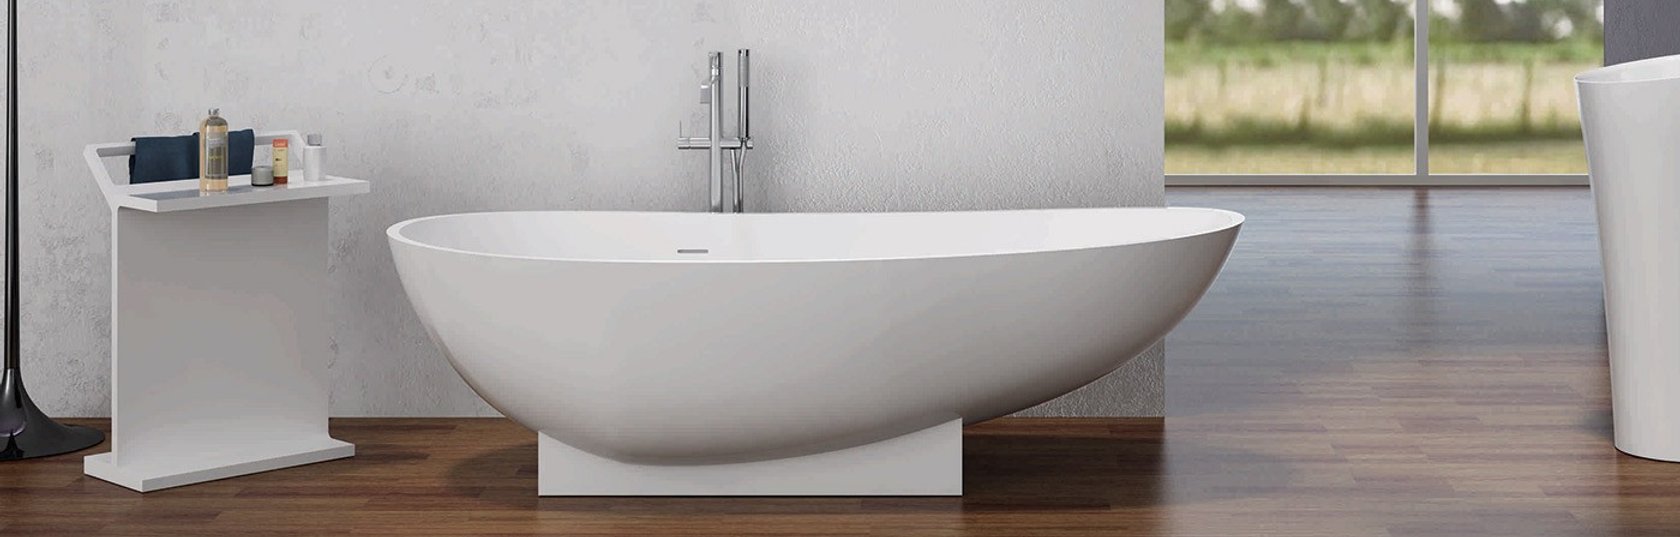 7 stunning baths to inspire your bathroom design